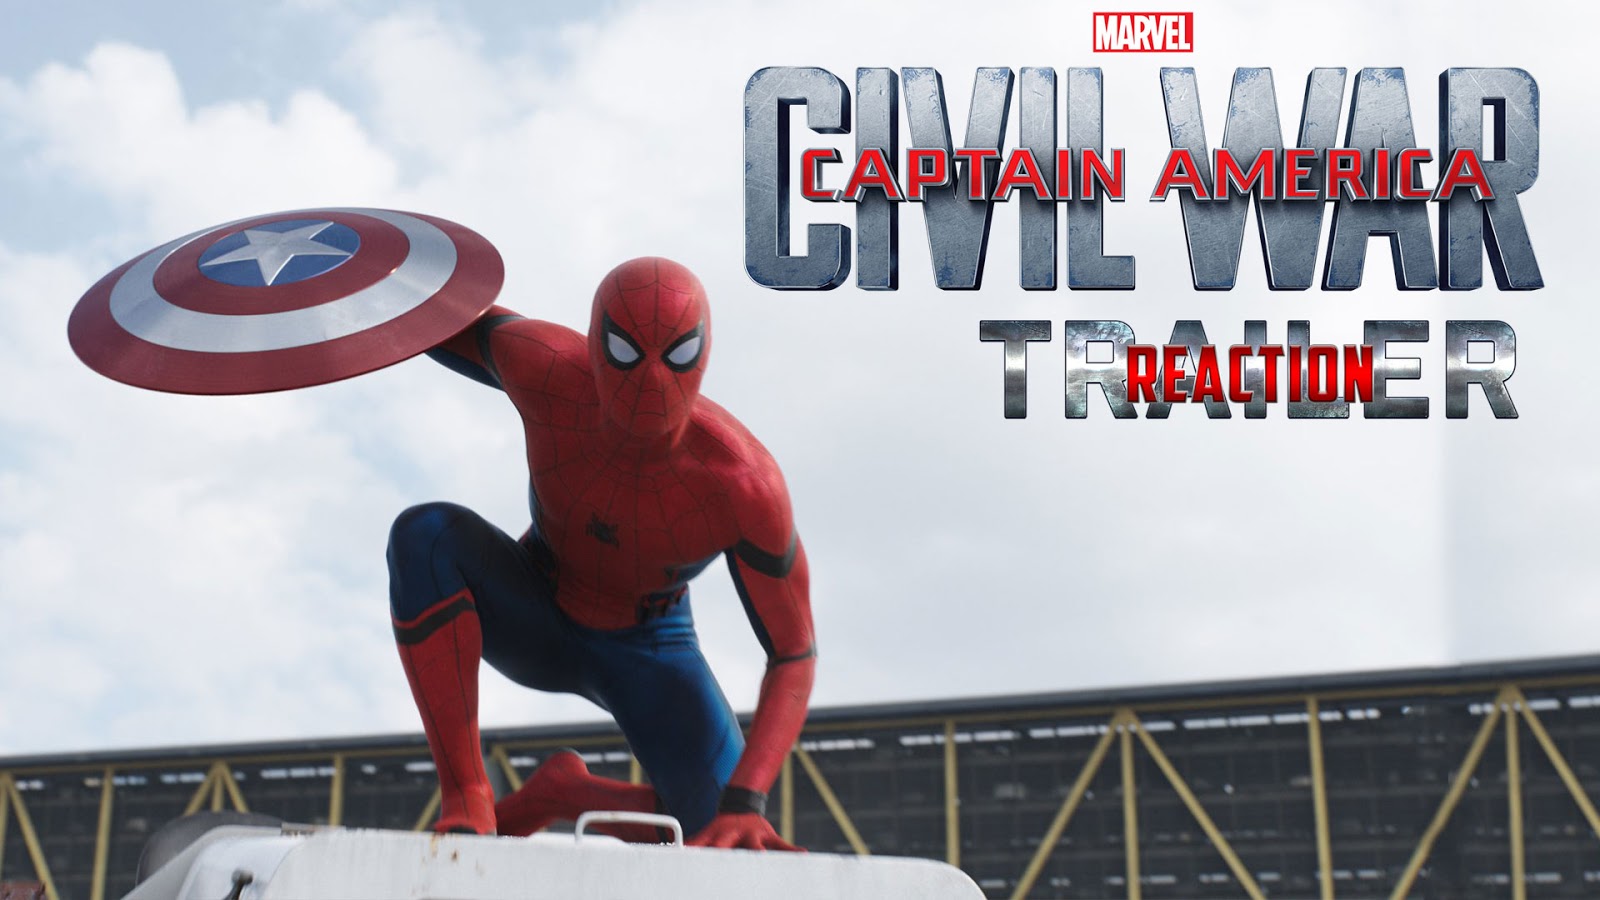 reaction to trailer for Captain America: Civil War